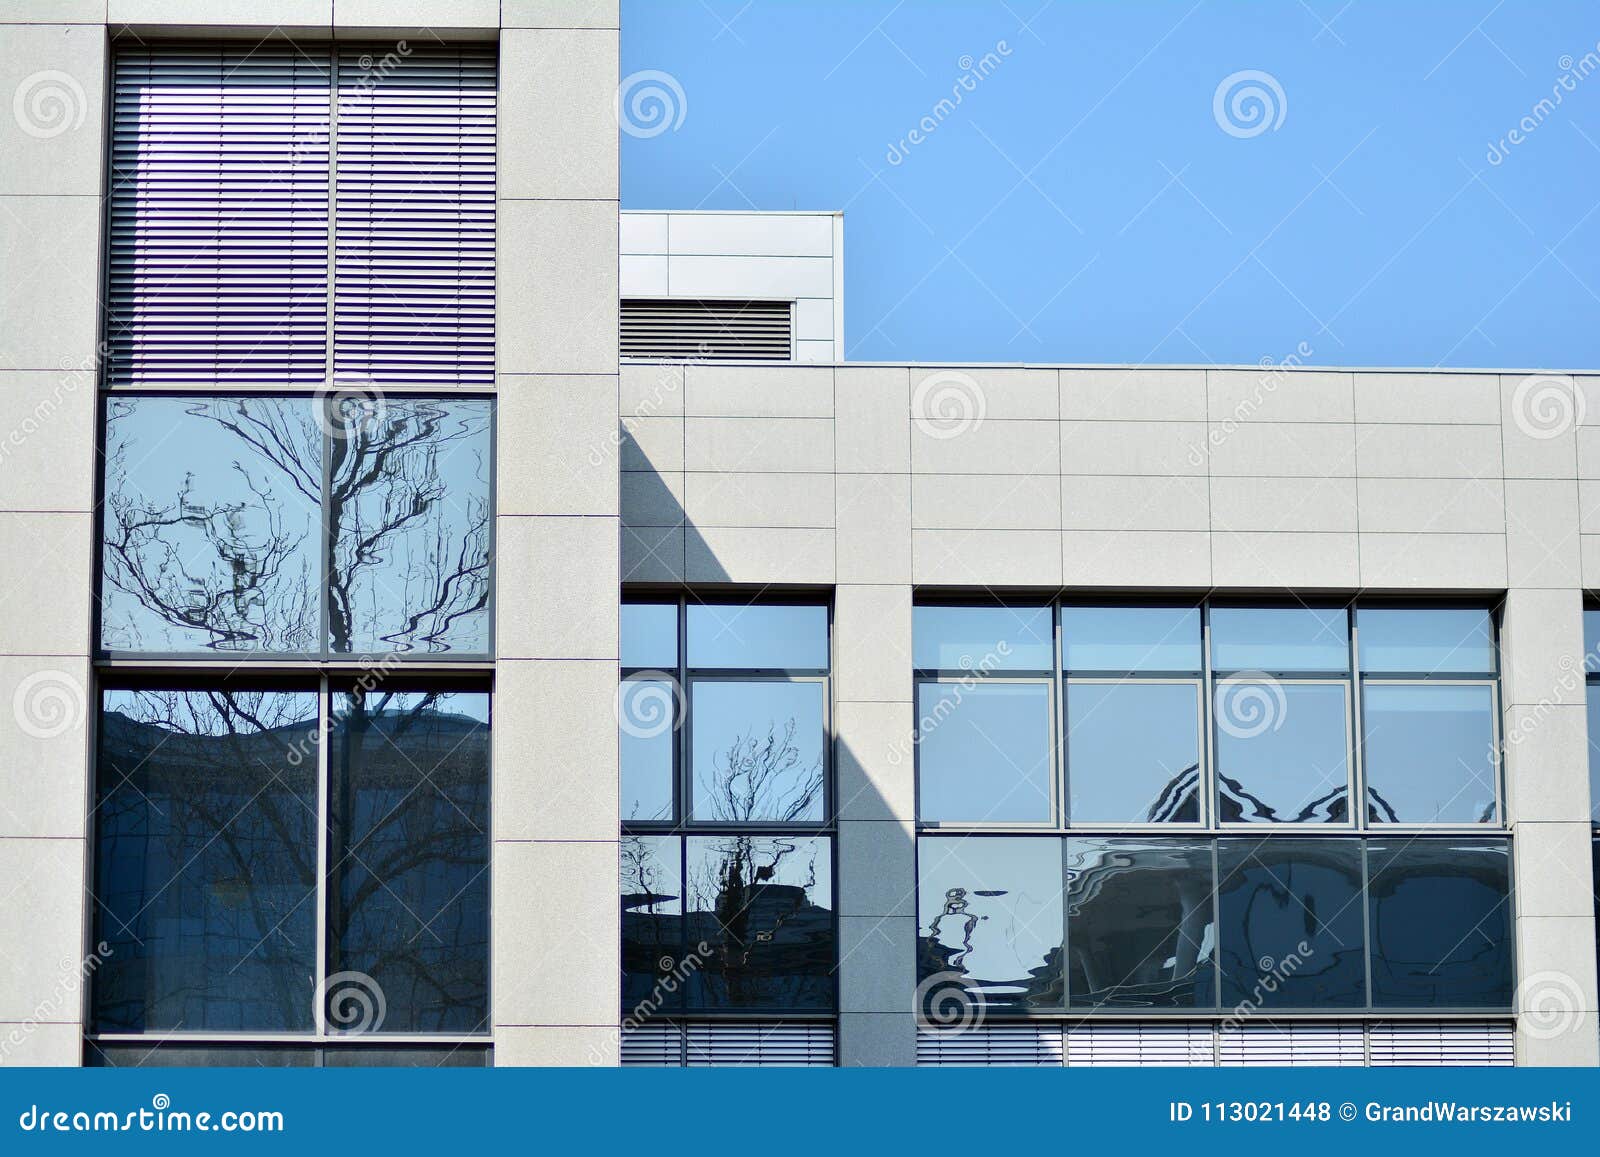 modern office buildings exterior